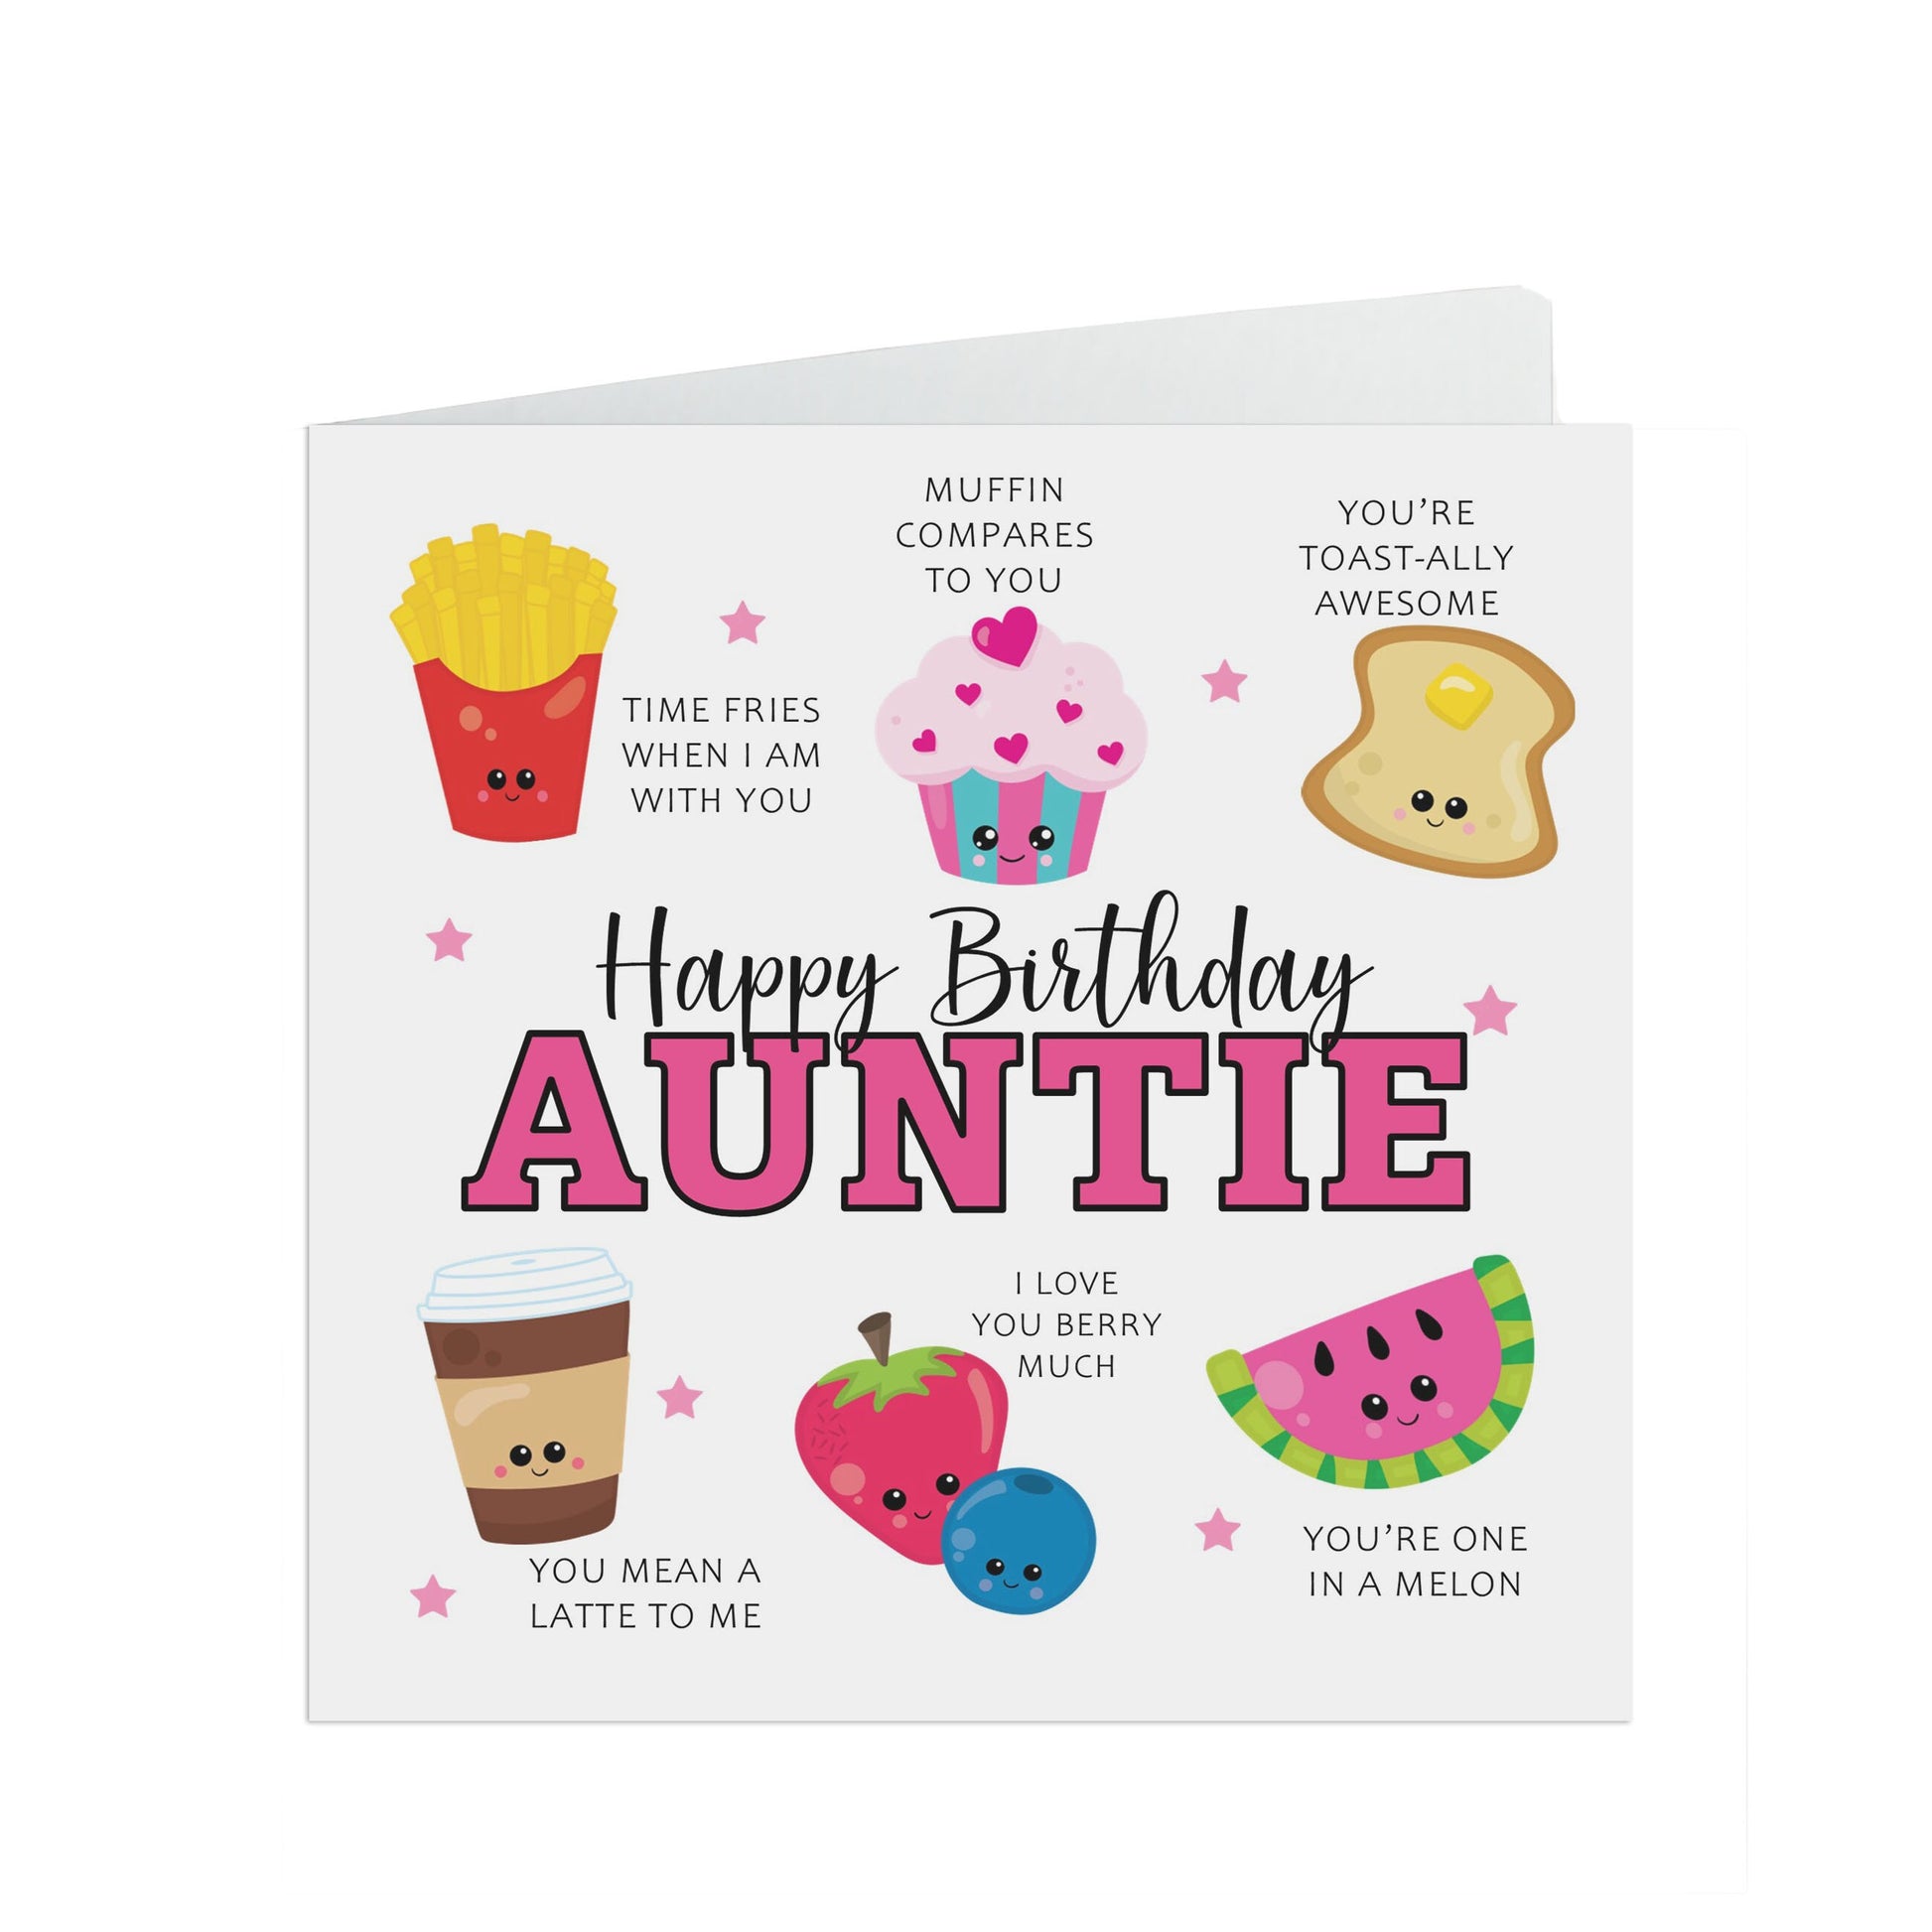 Auntie Birthday Card - Funny Auntie Pun Birthday Card